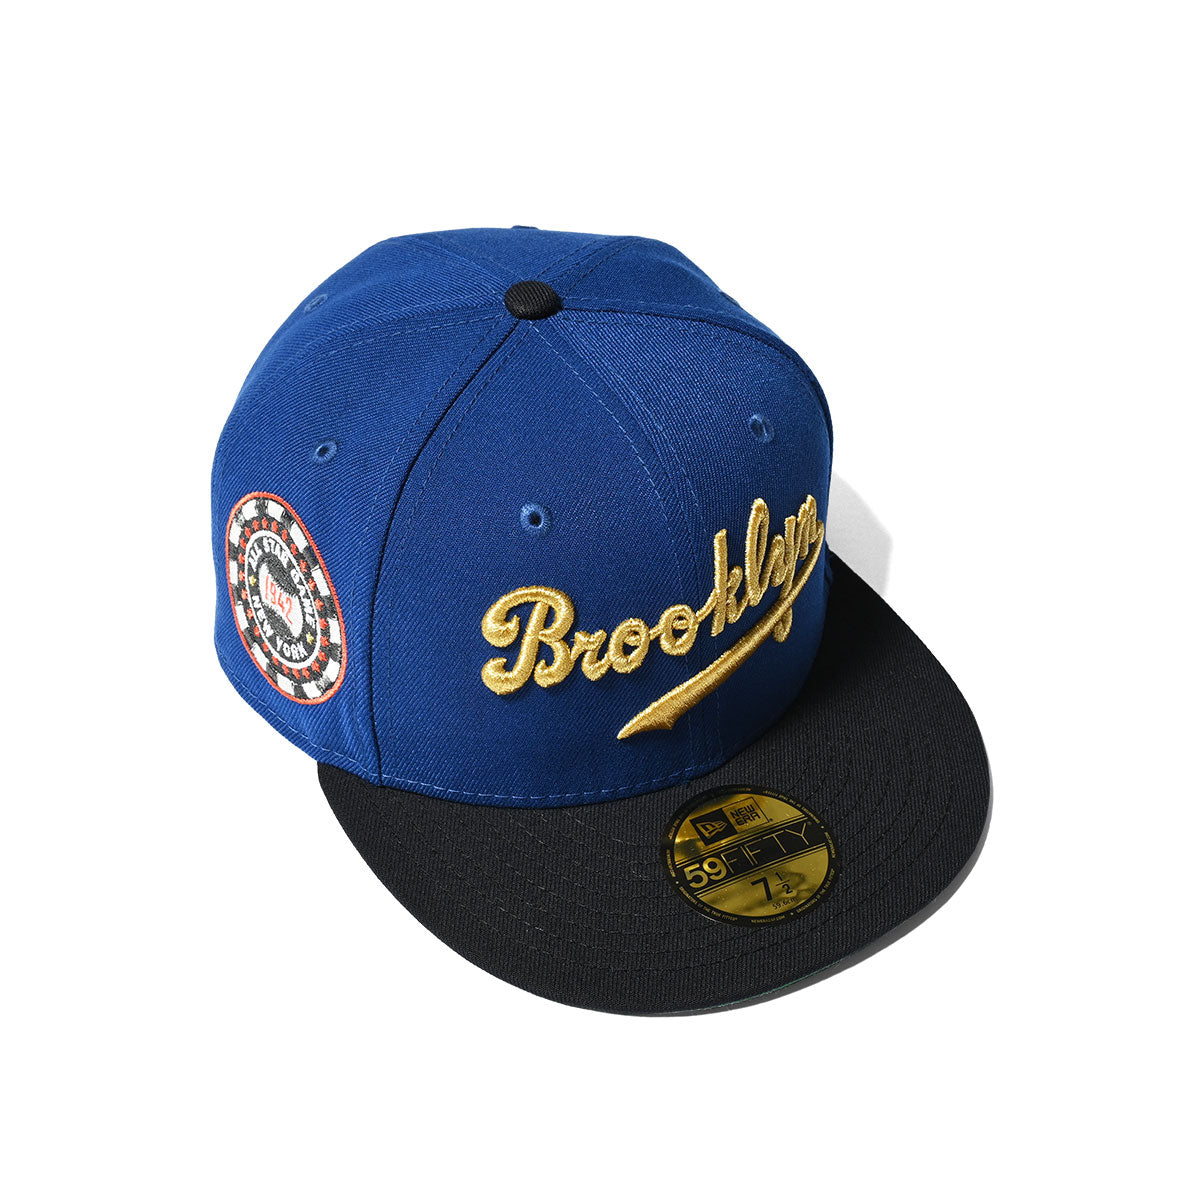 NEW ERA Brooklyn Dodgers - 59FIFTY 1949 ASG LIGHT ROYAL/NAVY